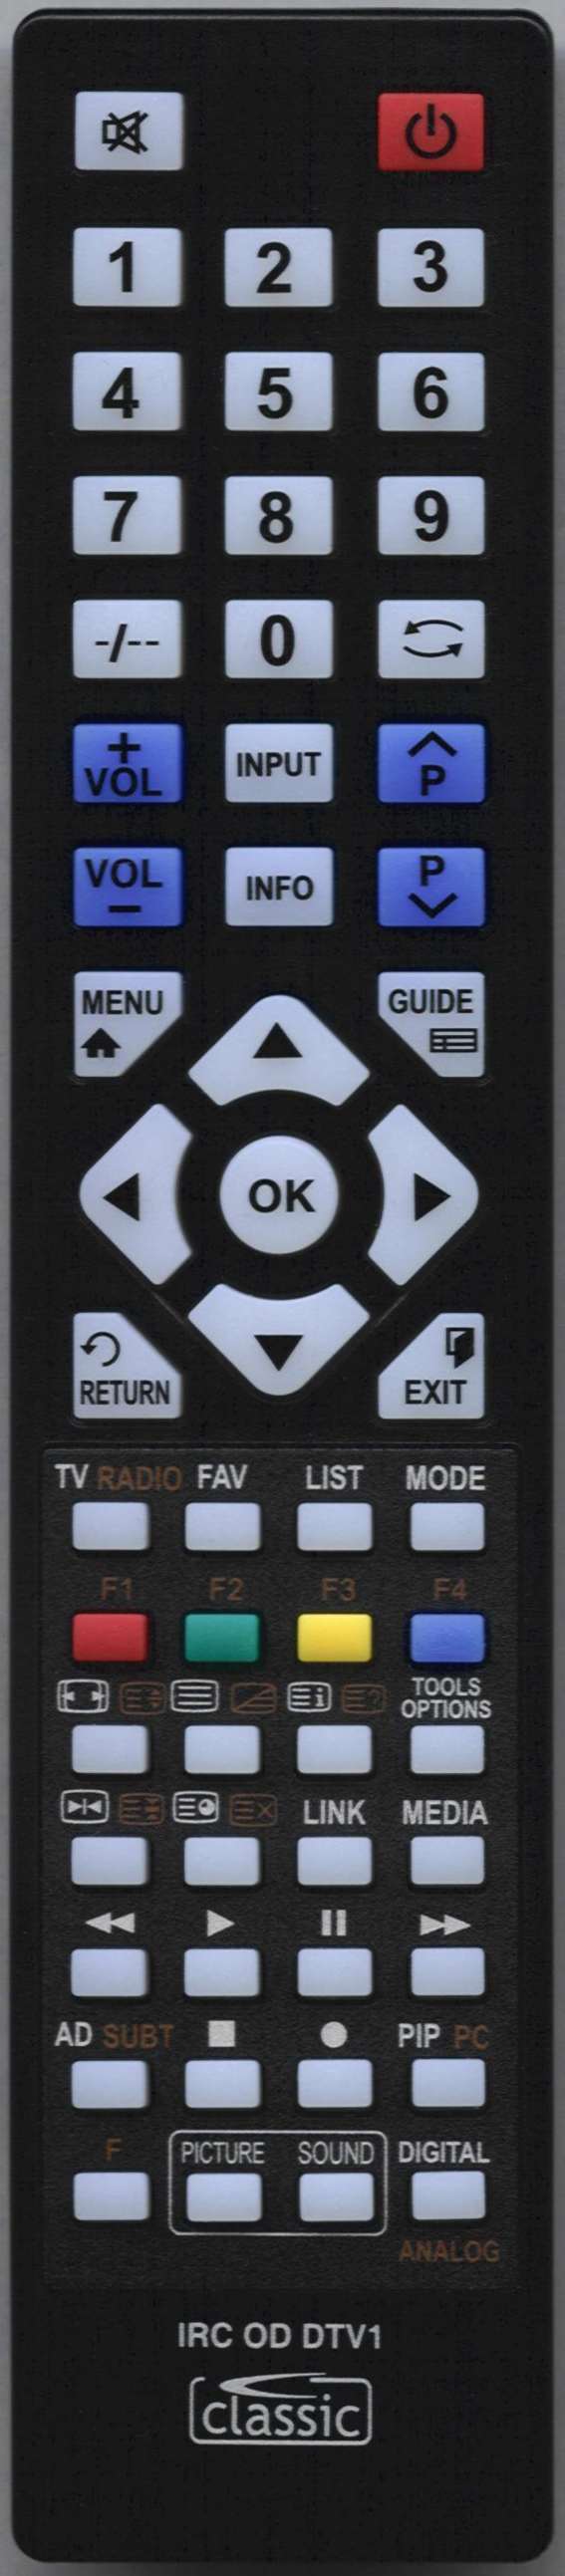 ORION TV32PL173 Remote Control